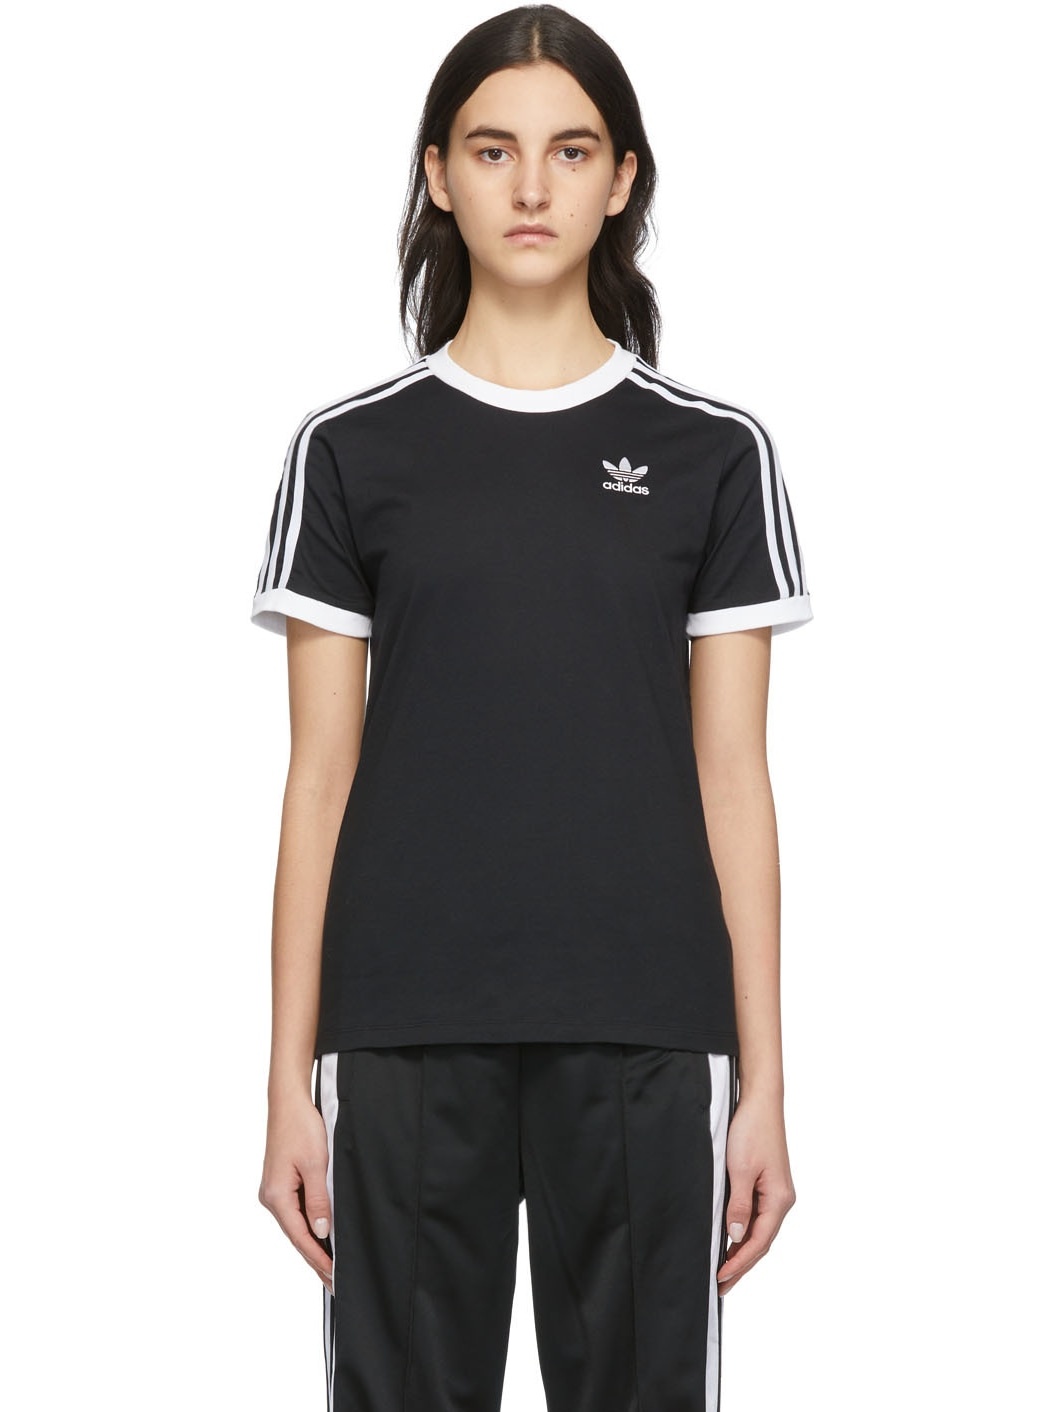 Black Adicolor 3 Stripes T-Shirt - 1